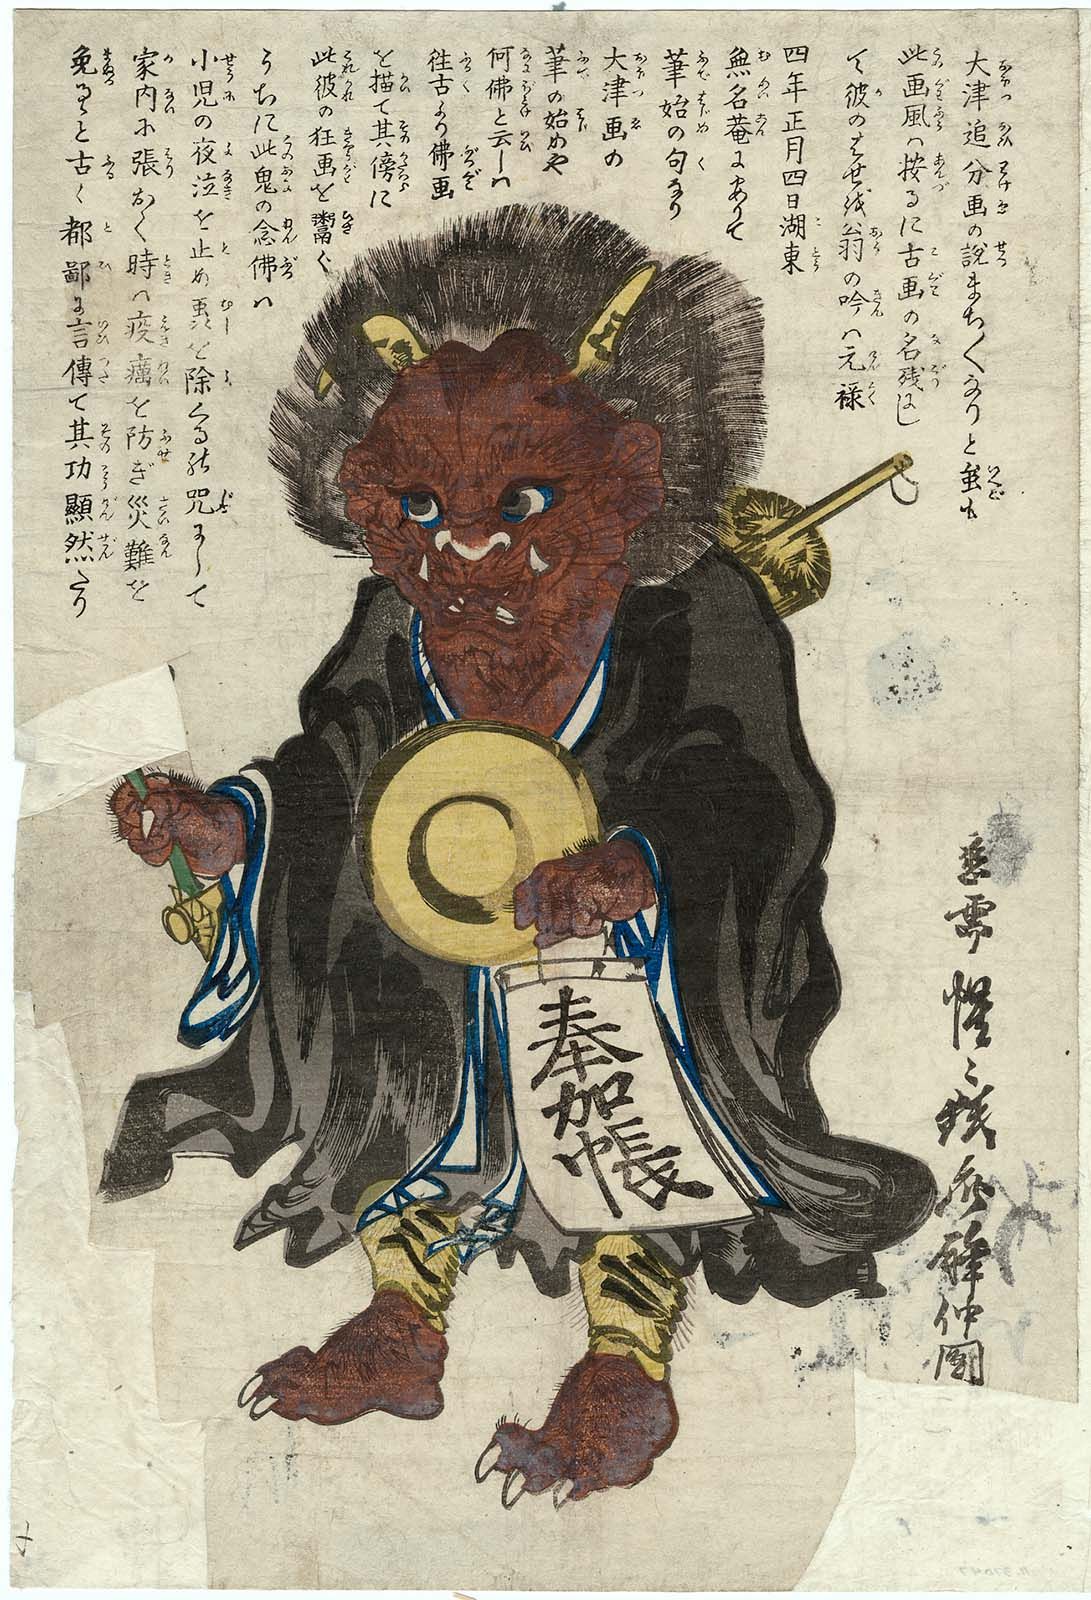 Ôtsu-e: Demonio convertido al Budismo (Oni no nenbutsu) by Kawanabe Kyōsai - 1860s - 35.8 x 24.3 cm Museum of Fine Arts Boston